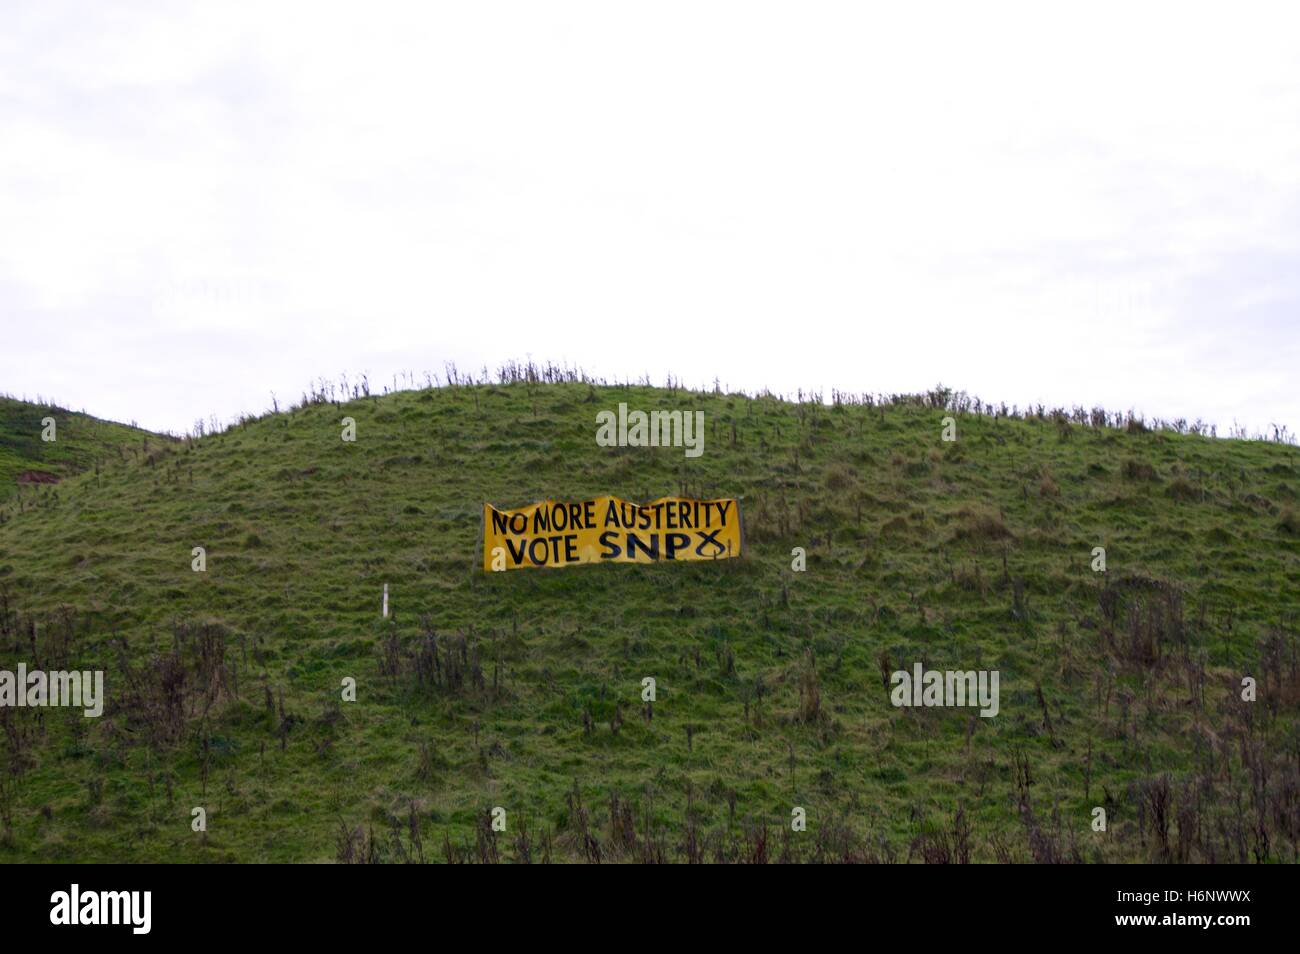 'No more austerity' vote SNP sign on hill in Scotland Stock Photo